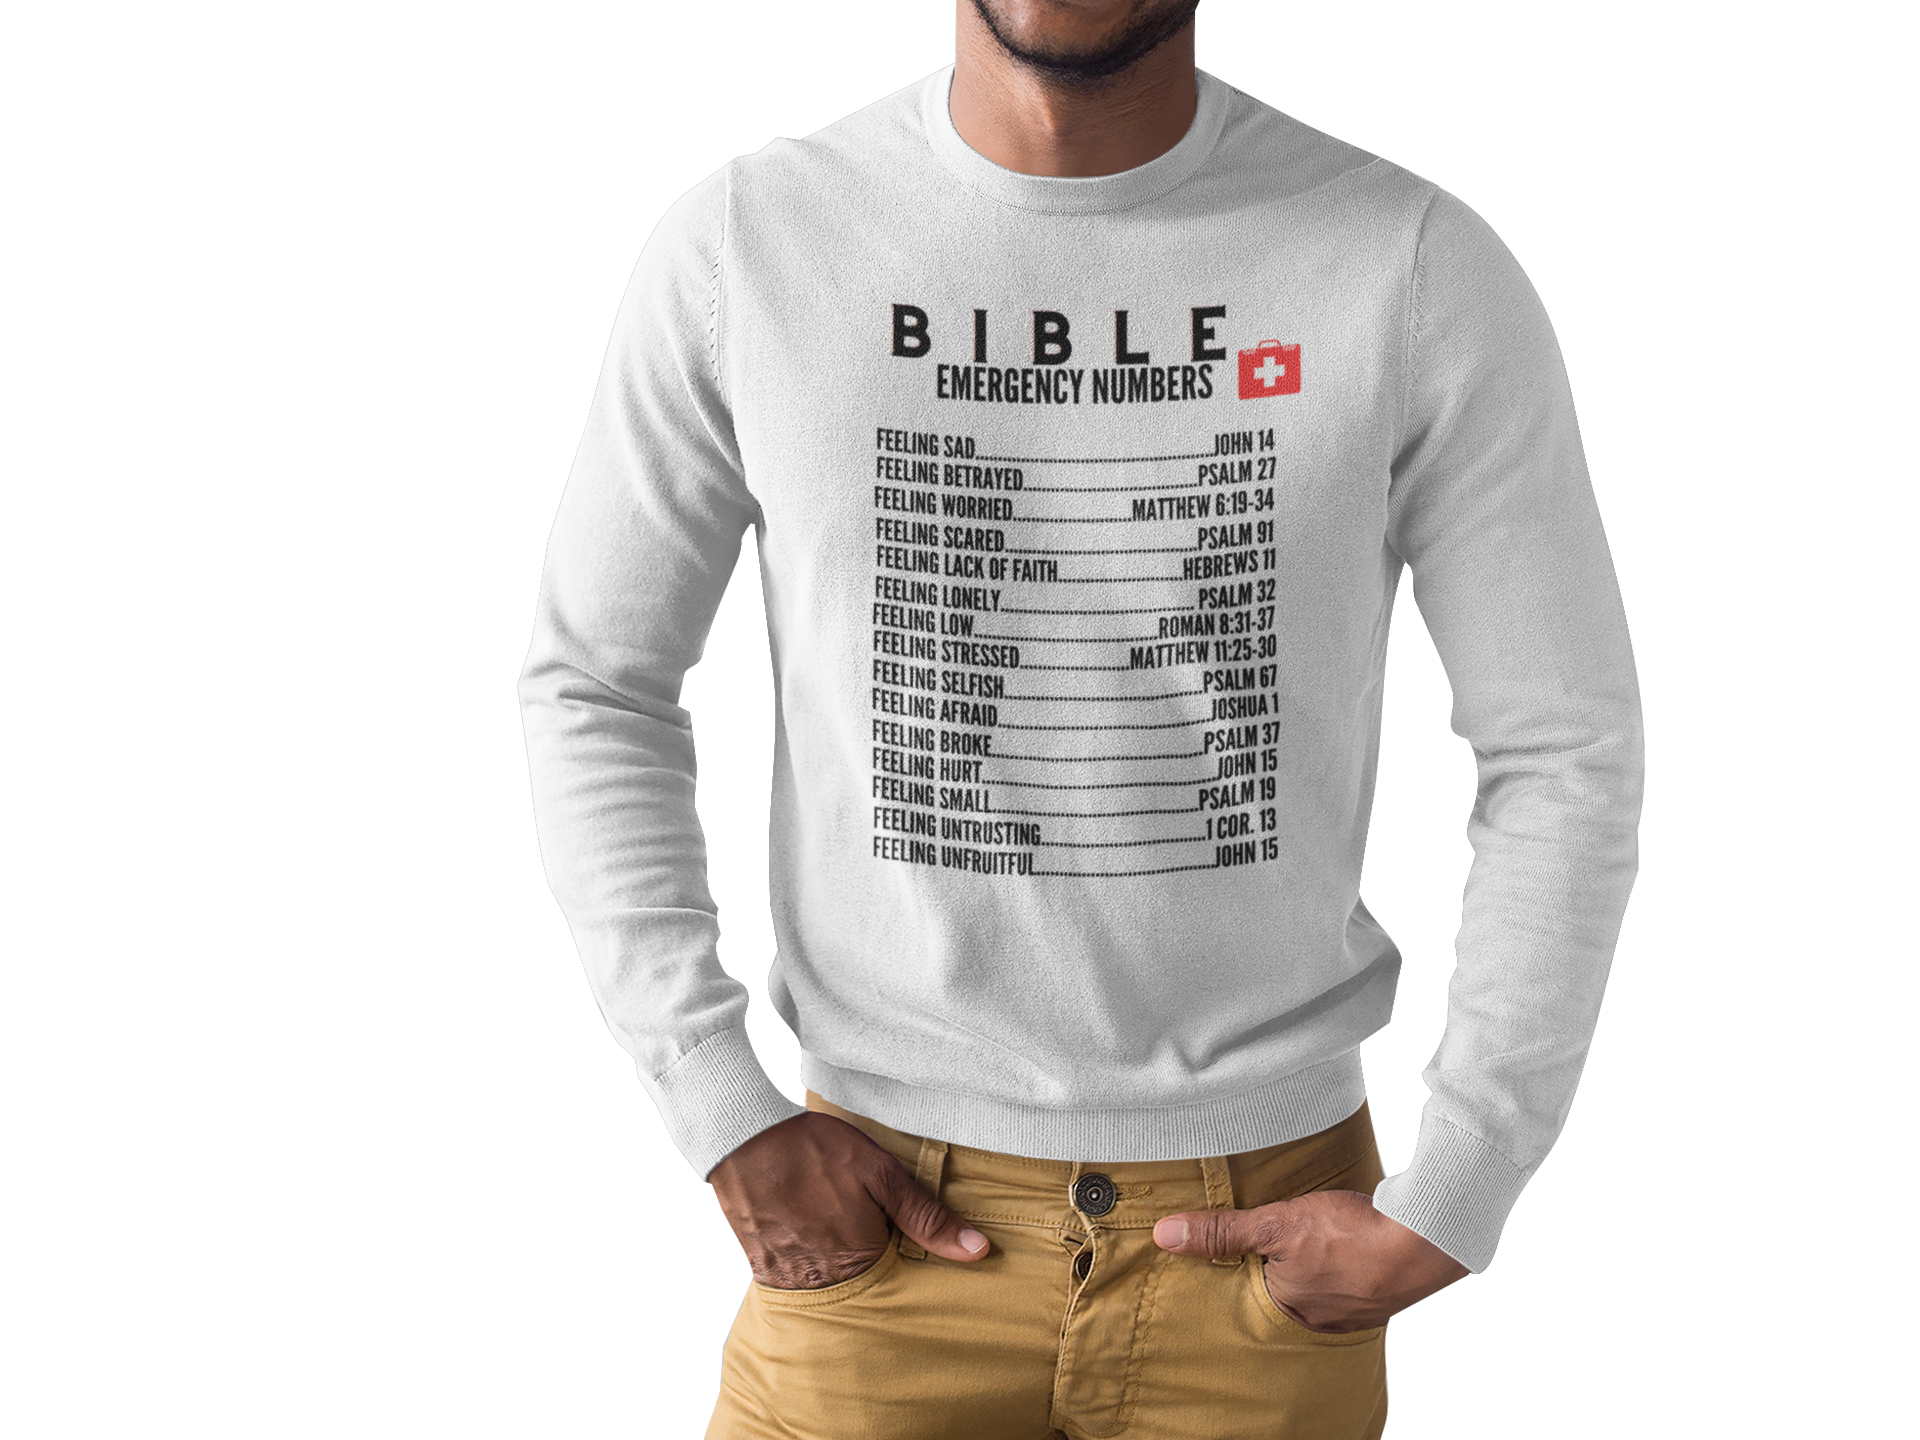 Emergency Bible Numbers Christian T-Shirt - Long Sleeve Black